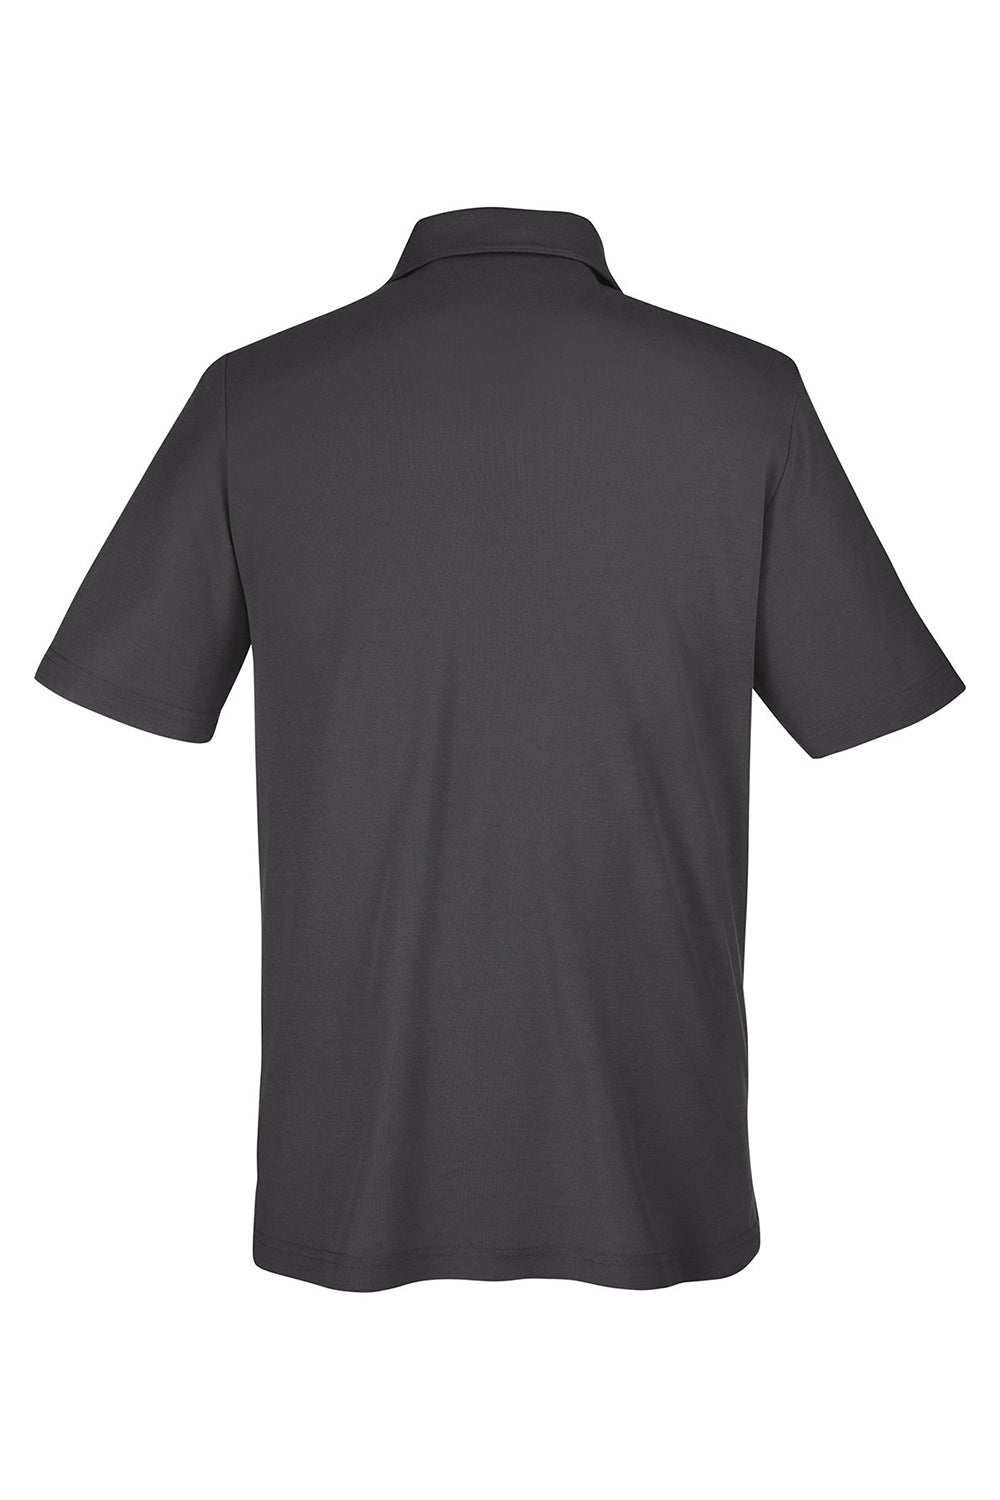 Core 365 CE112 Mens Fusion ChromaSoft Performance Moisture Wicking Short Sleeve Polo Shirt Carbon Grey Flat Back